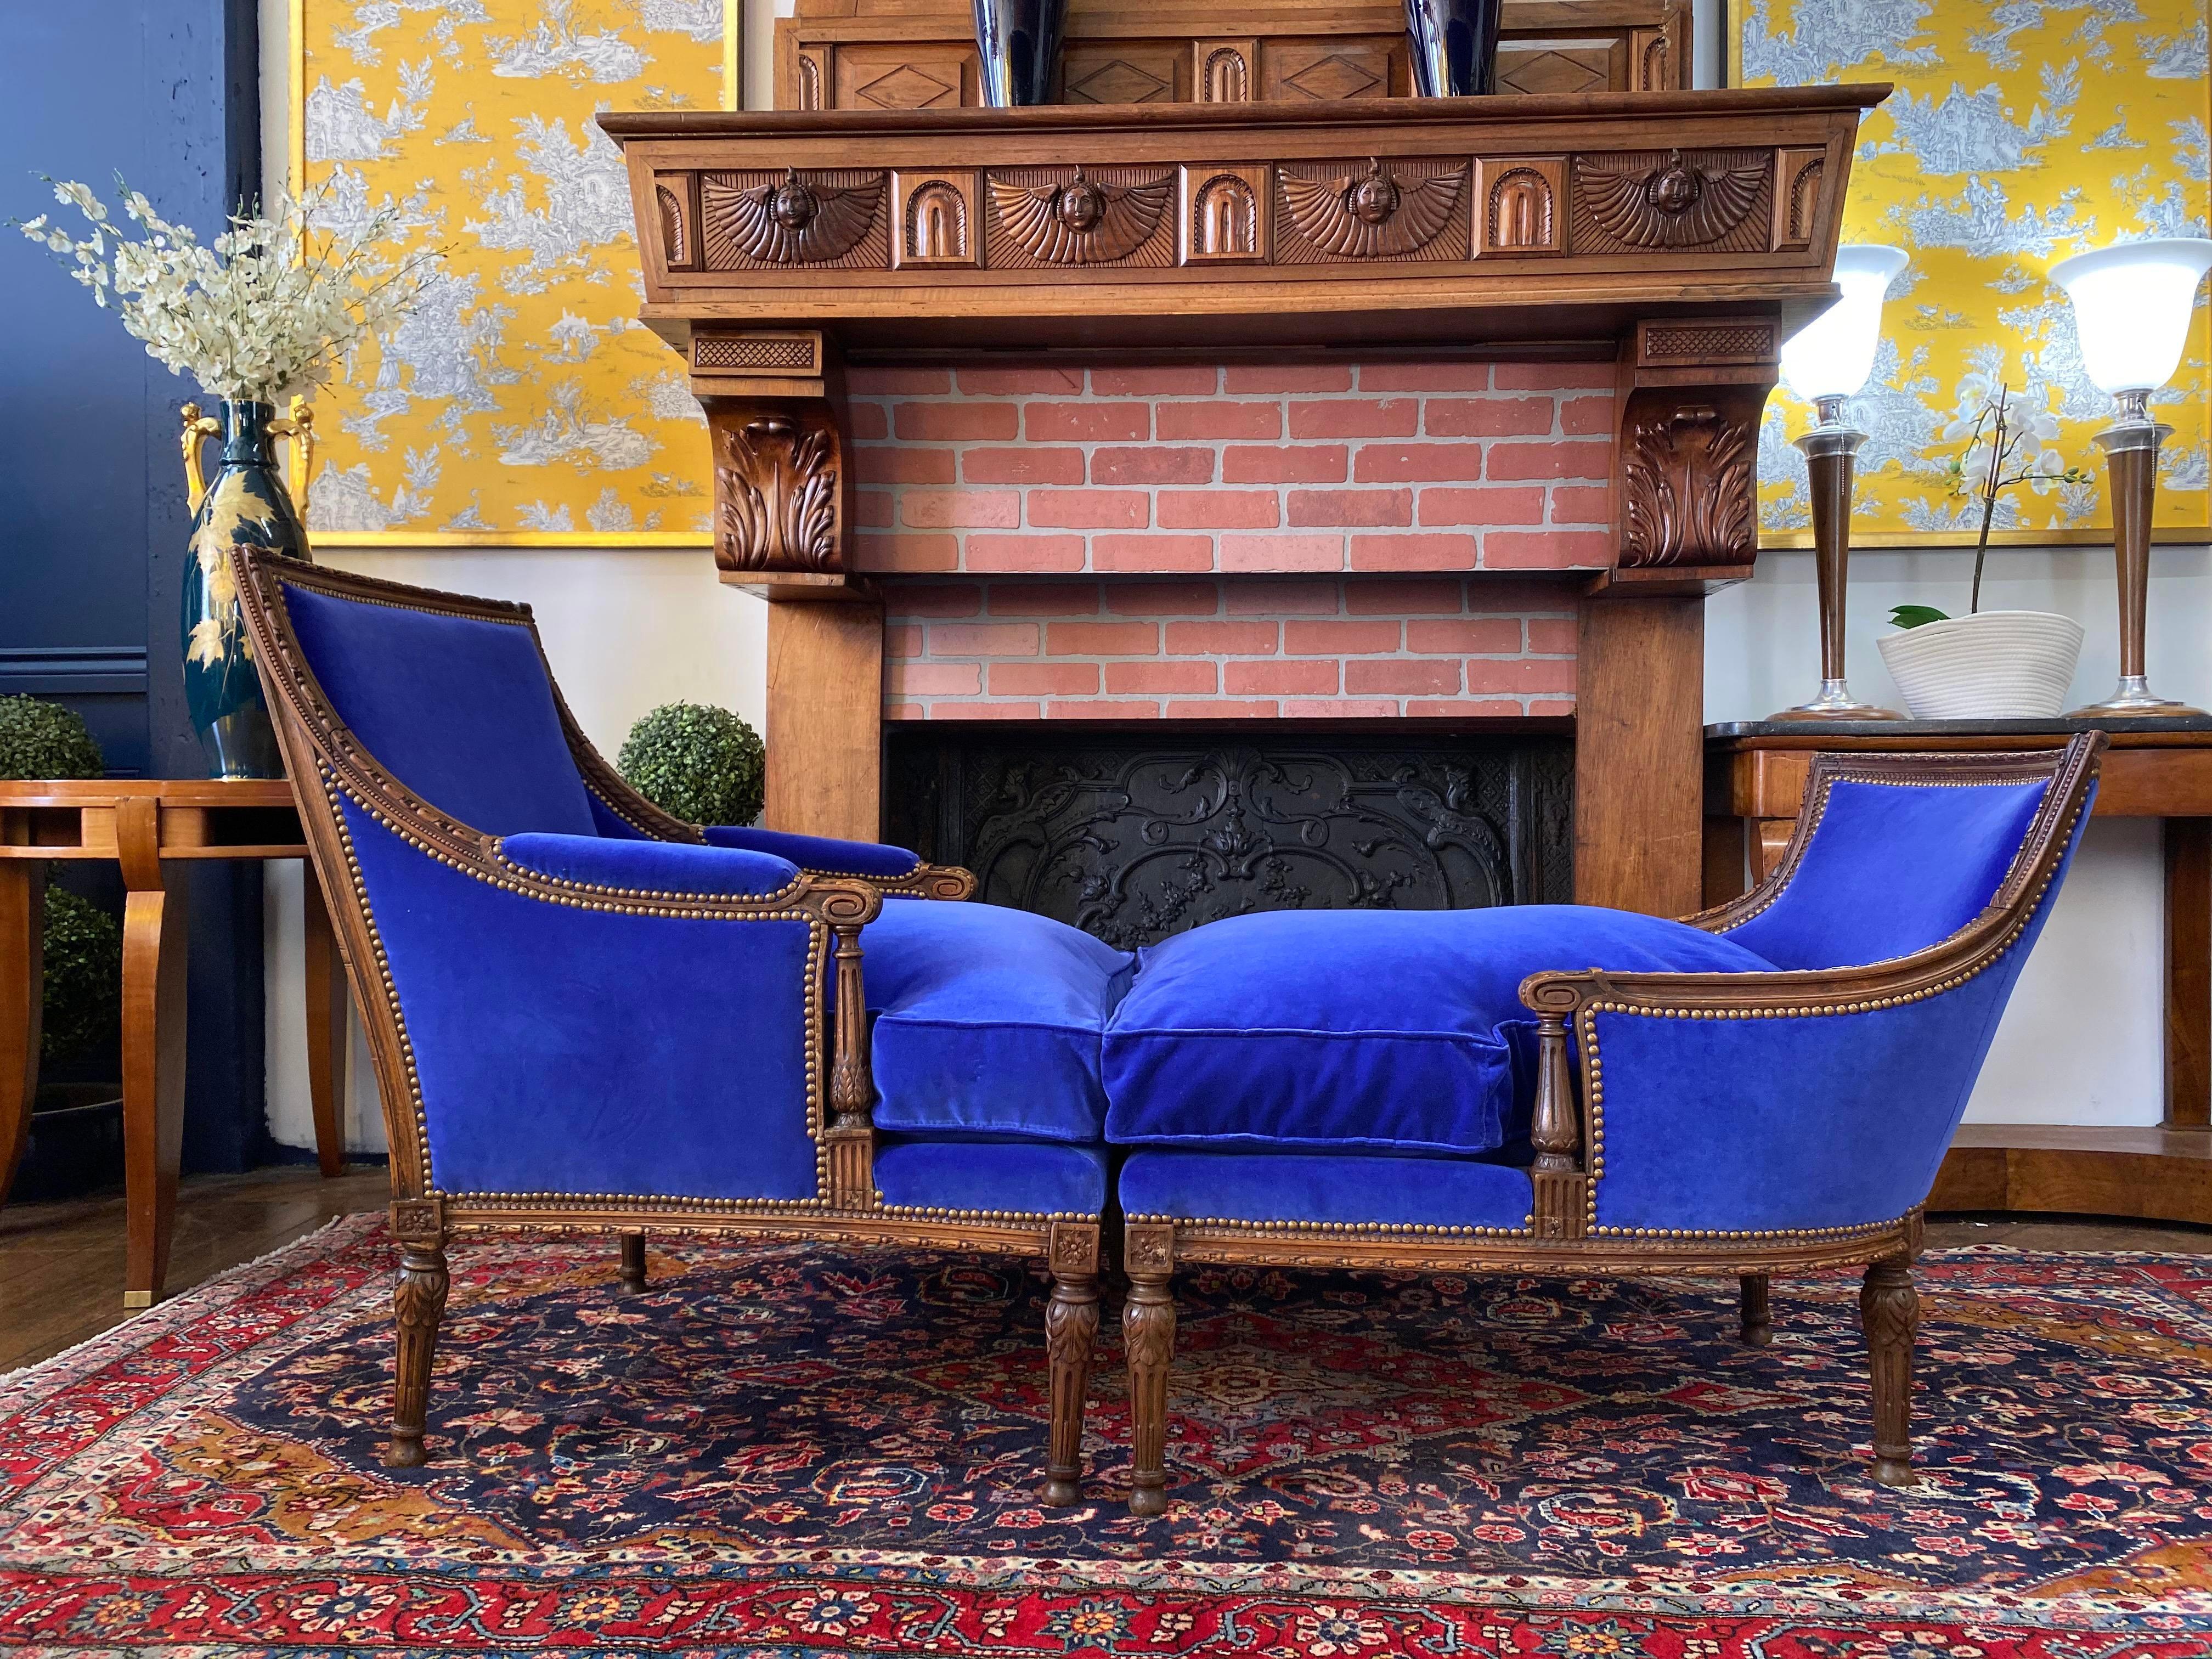 Rarísimo sillón francés Luis XVI Duchesse Brisee (Chaise Longue o Lounge chair) de Nicolas-Jean Marchand, hacia la década de 1730. Madera de roble bellamente tallada a mano, recién restaurada y retapizada con tela de terciopelo azul de Casamance.